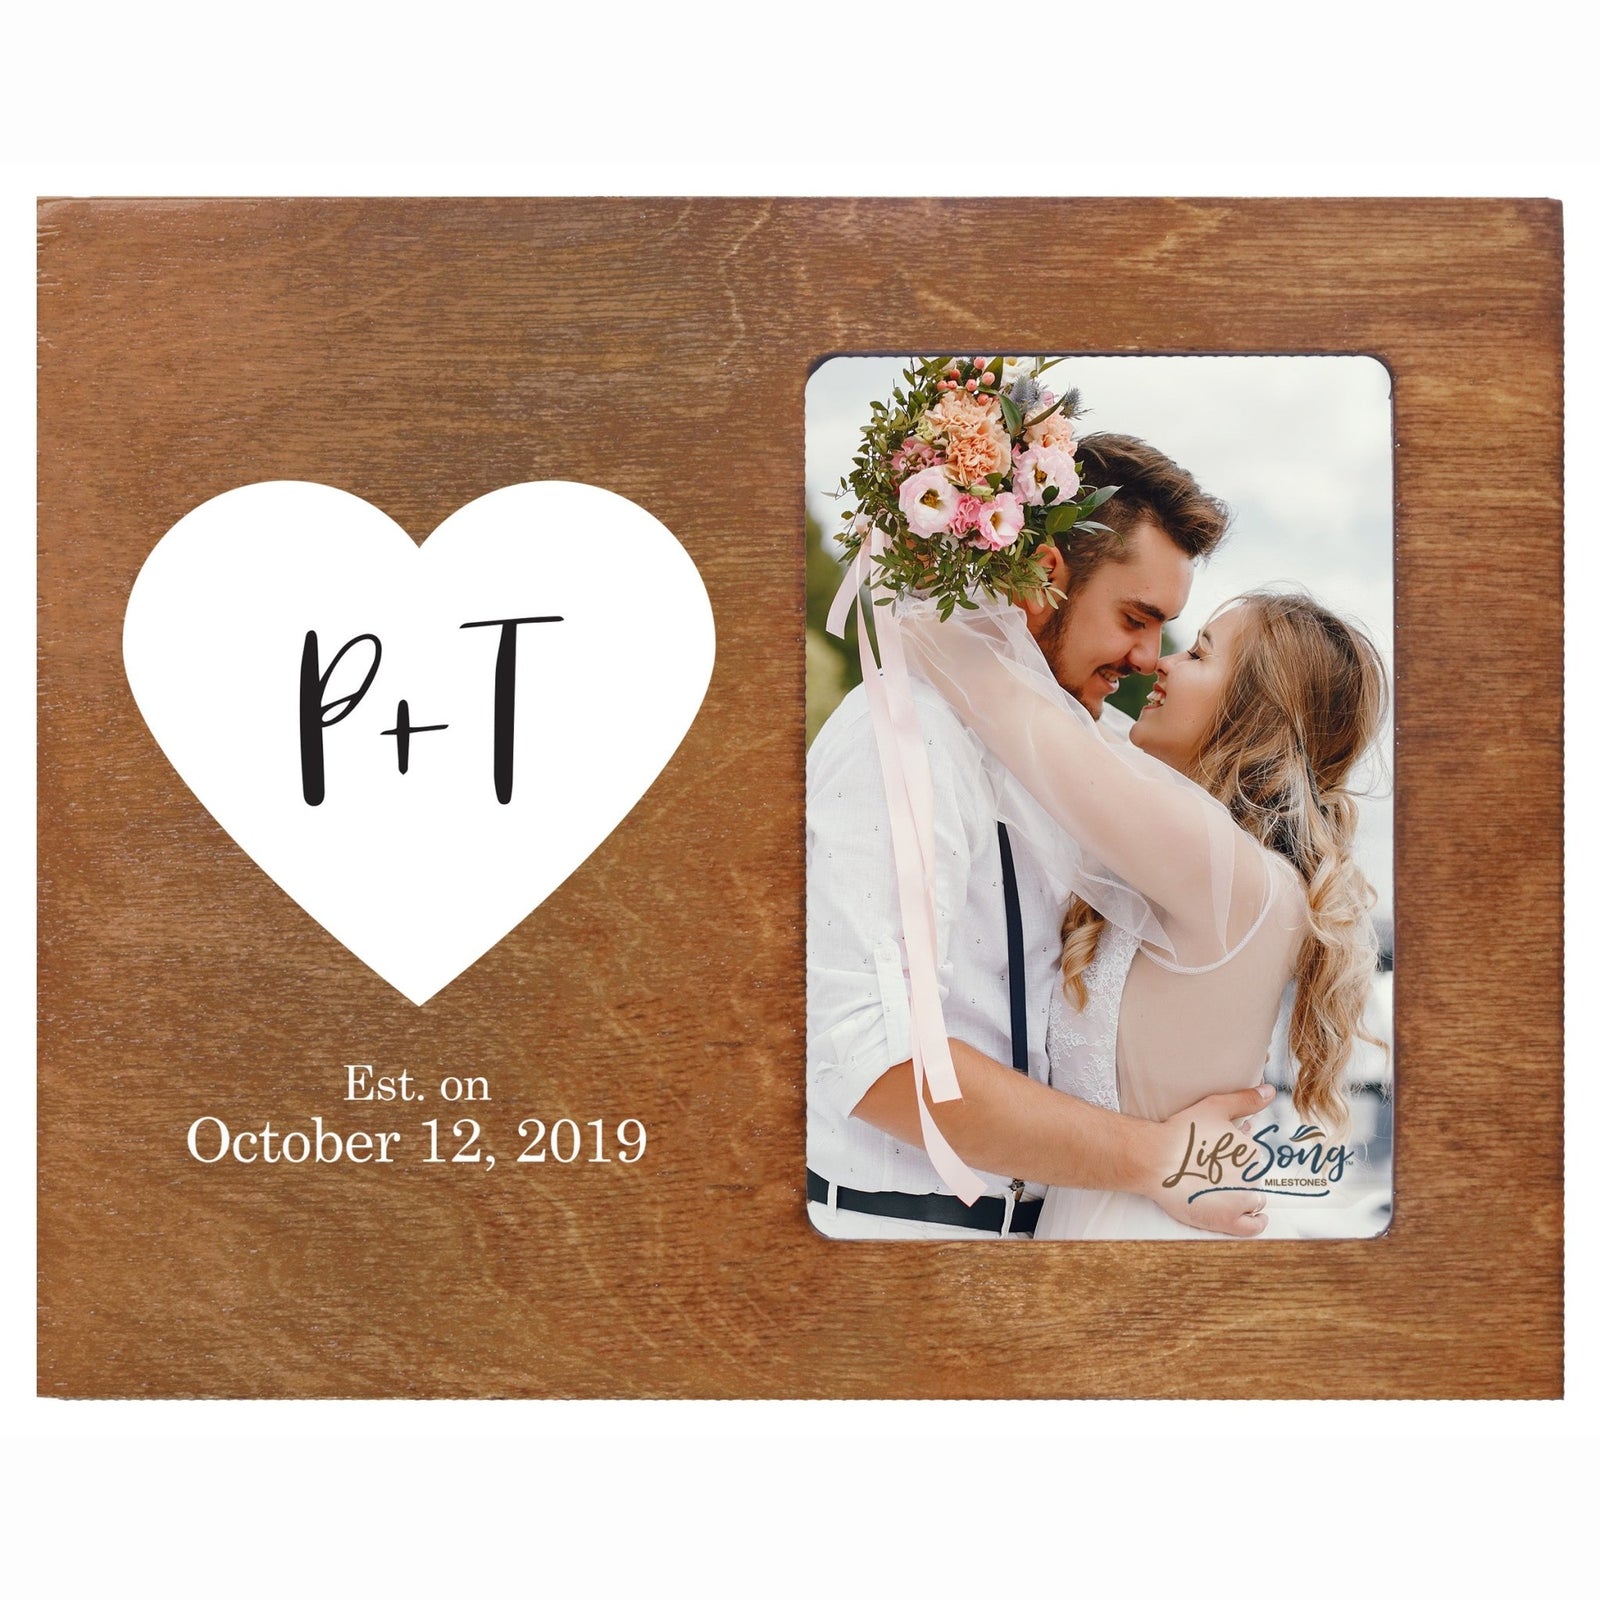 Custom Digitally Printed Wedding Photo Frame Holds 4x6 Photo - Initials Heart - LifeSong Milestones